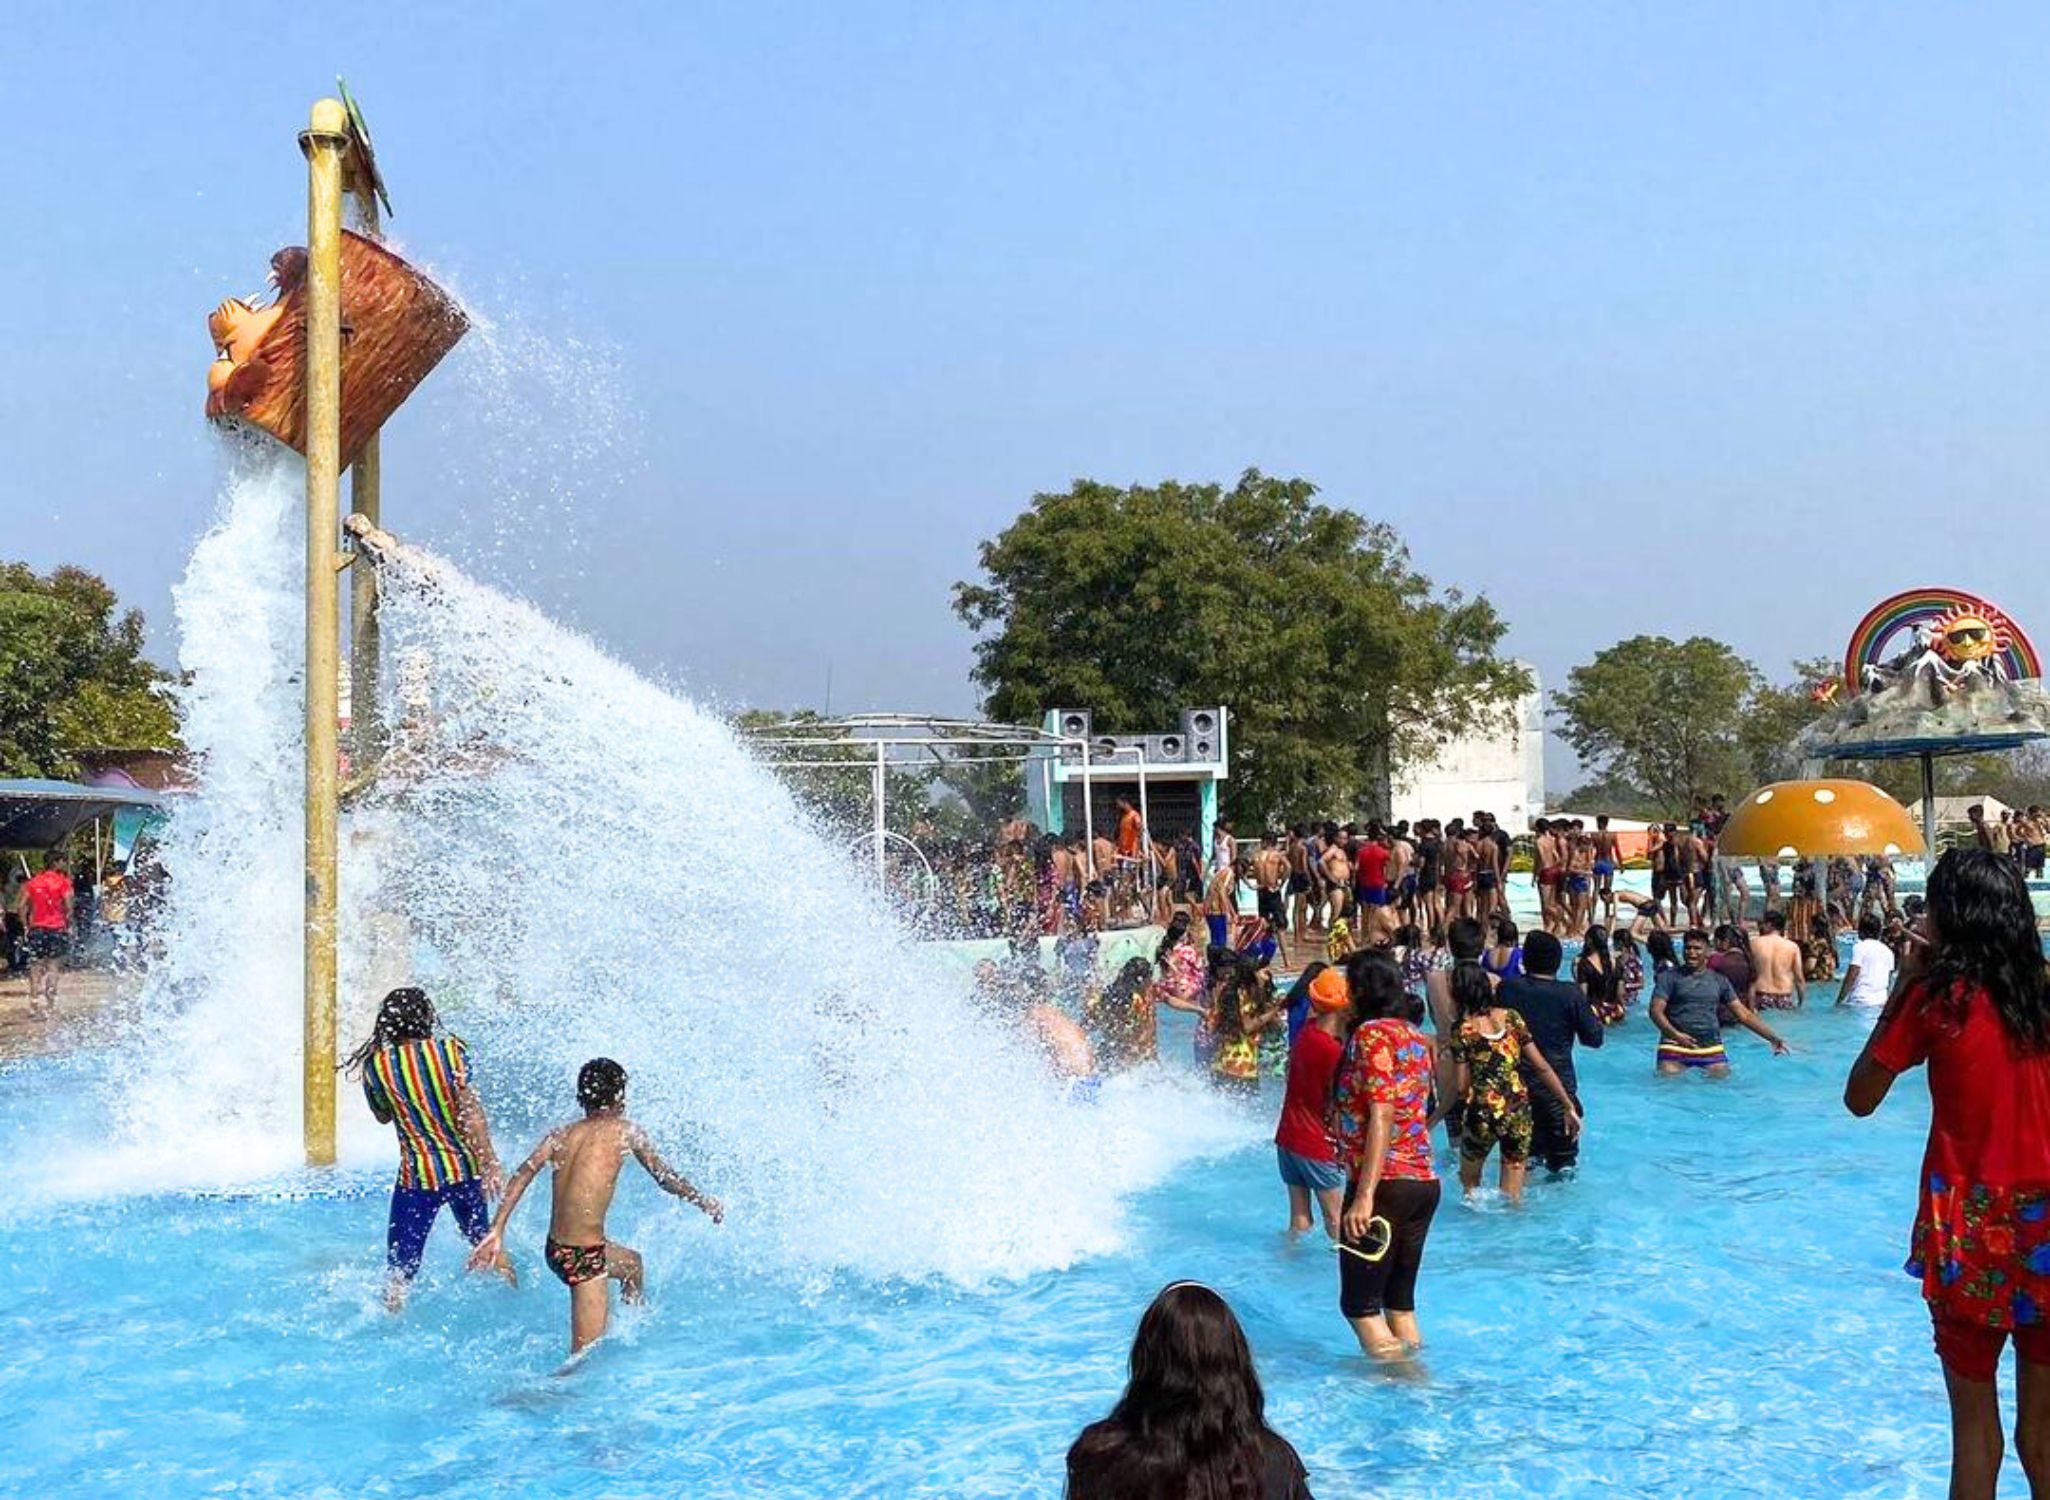 Dwarka Water Park Nagpur Tickets